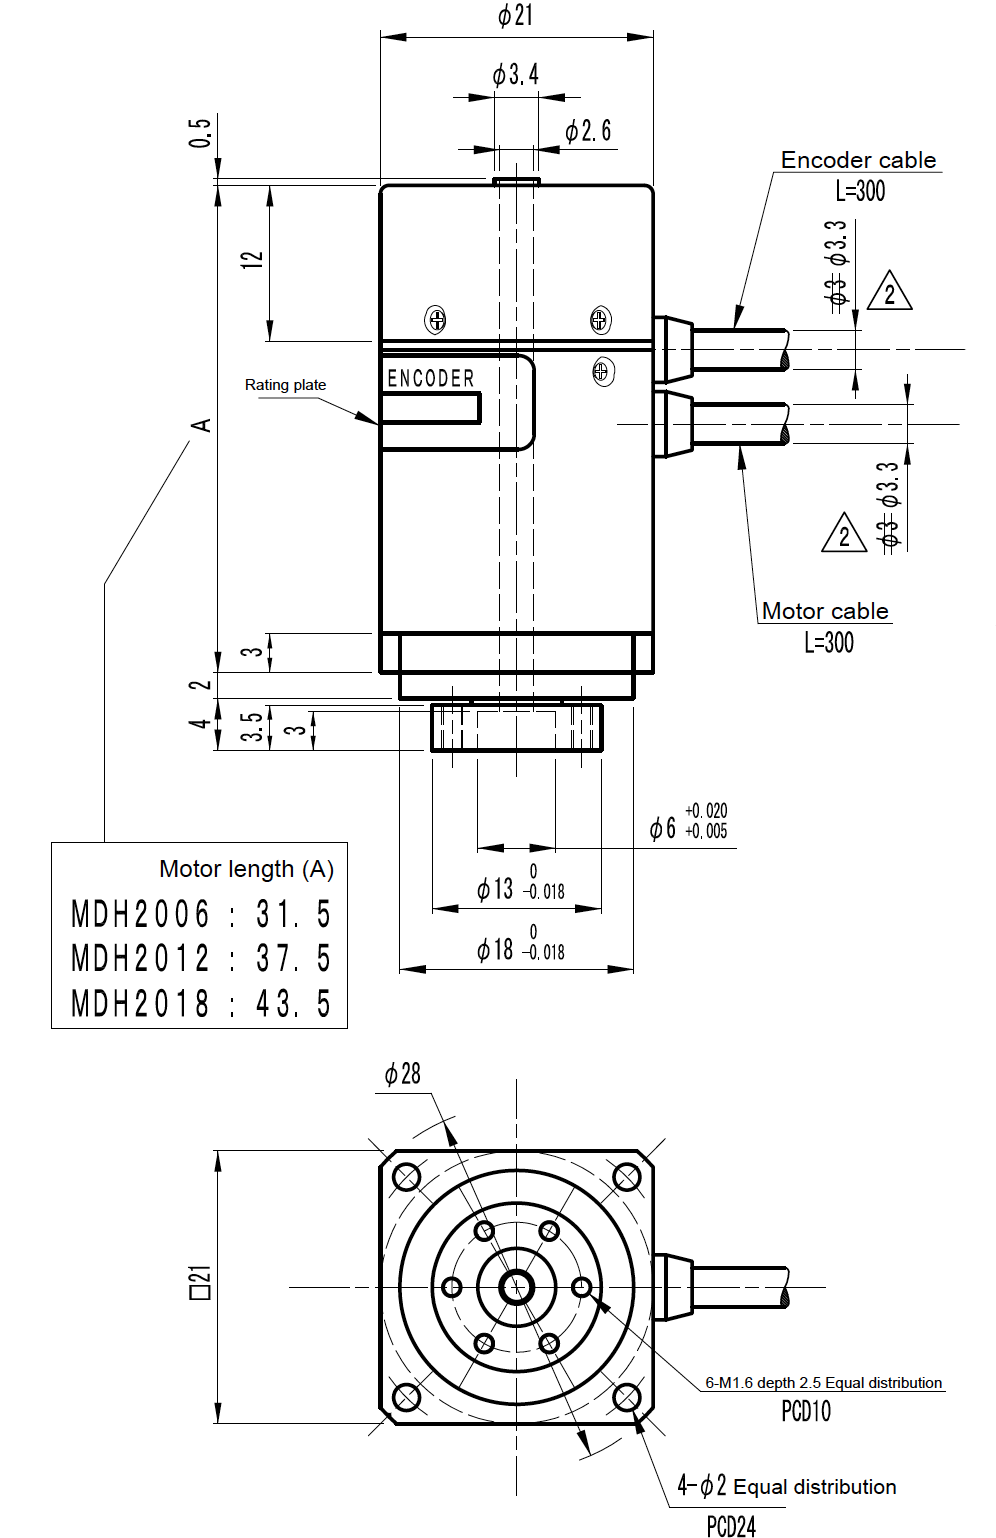 MDH-2012 system drawing